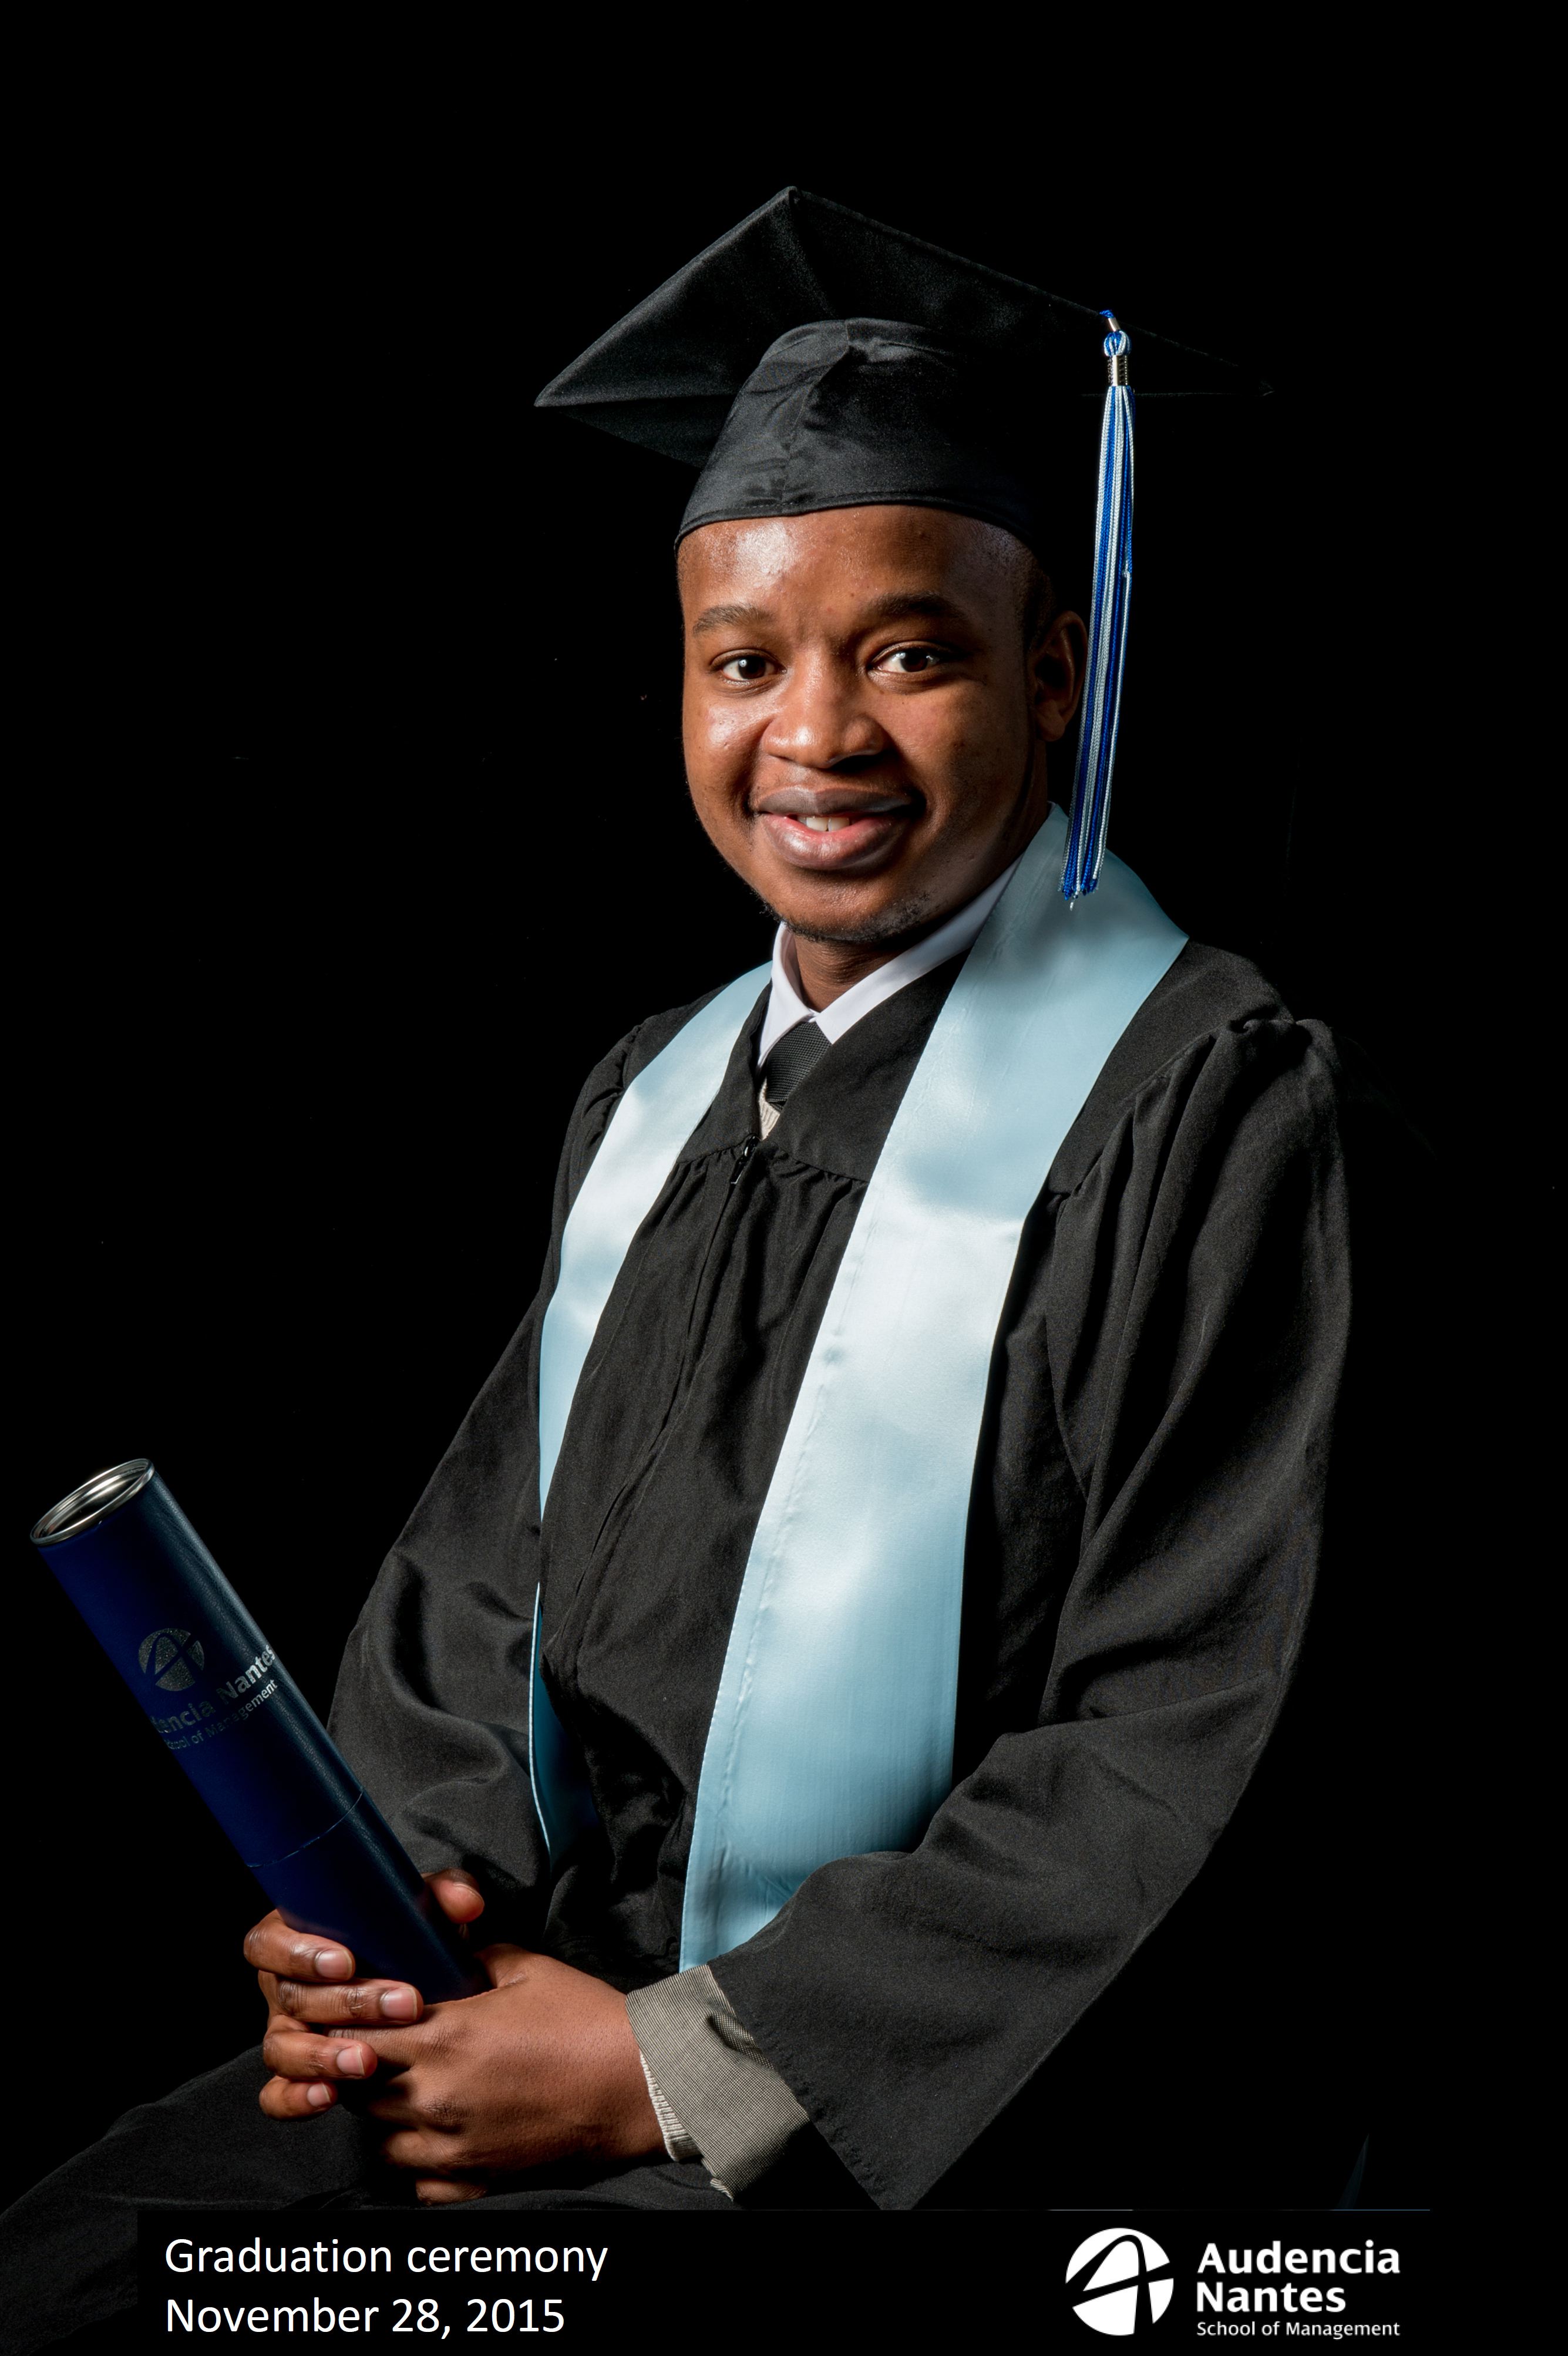 Masilo Mafube graduates